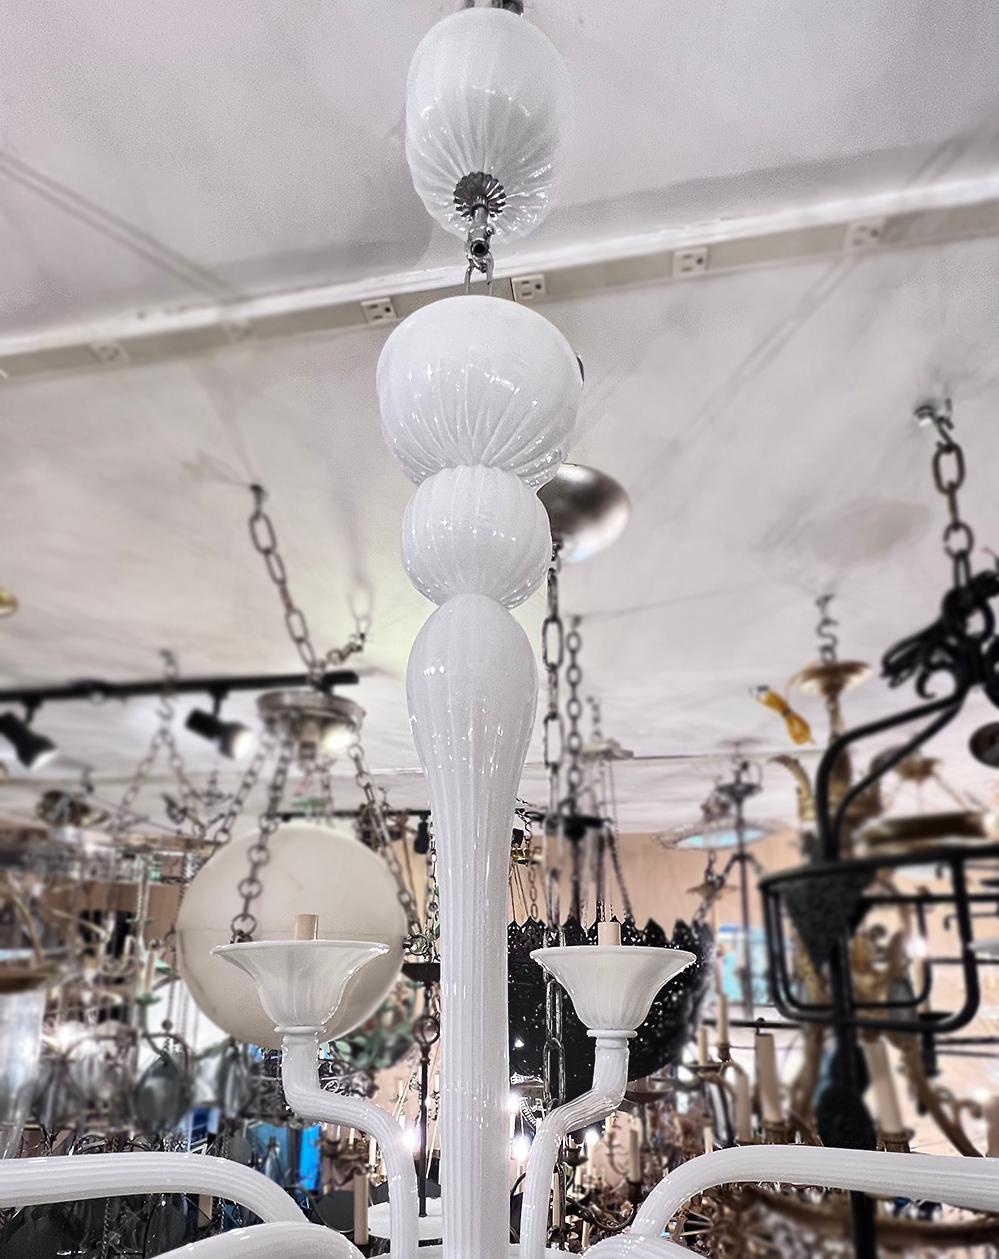 A circa 1960s Italian blown glass chandelier with 6 candelabra lights.

Measurements:
Drop: 28